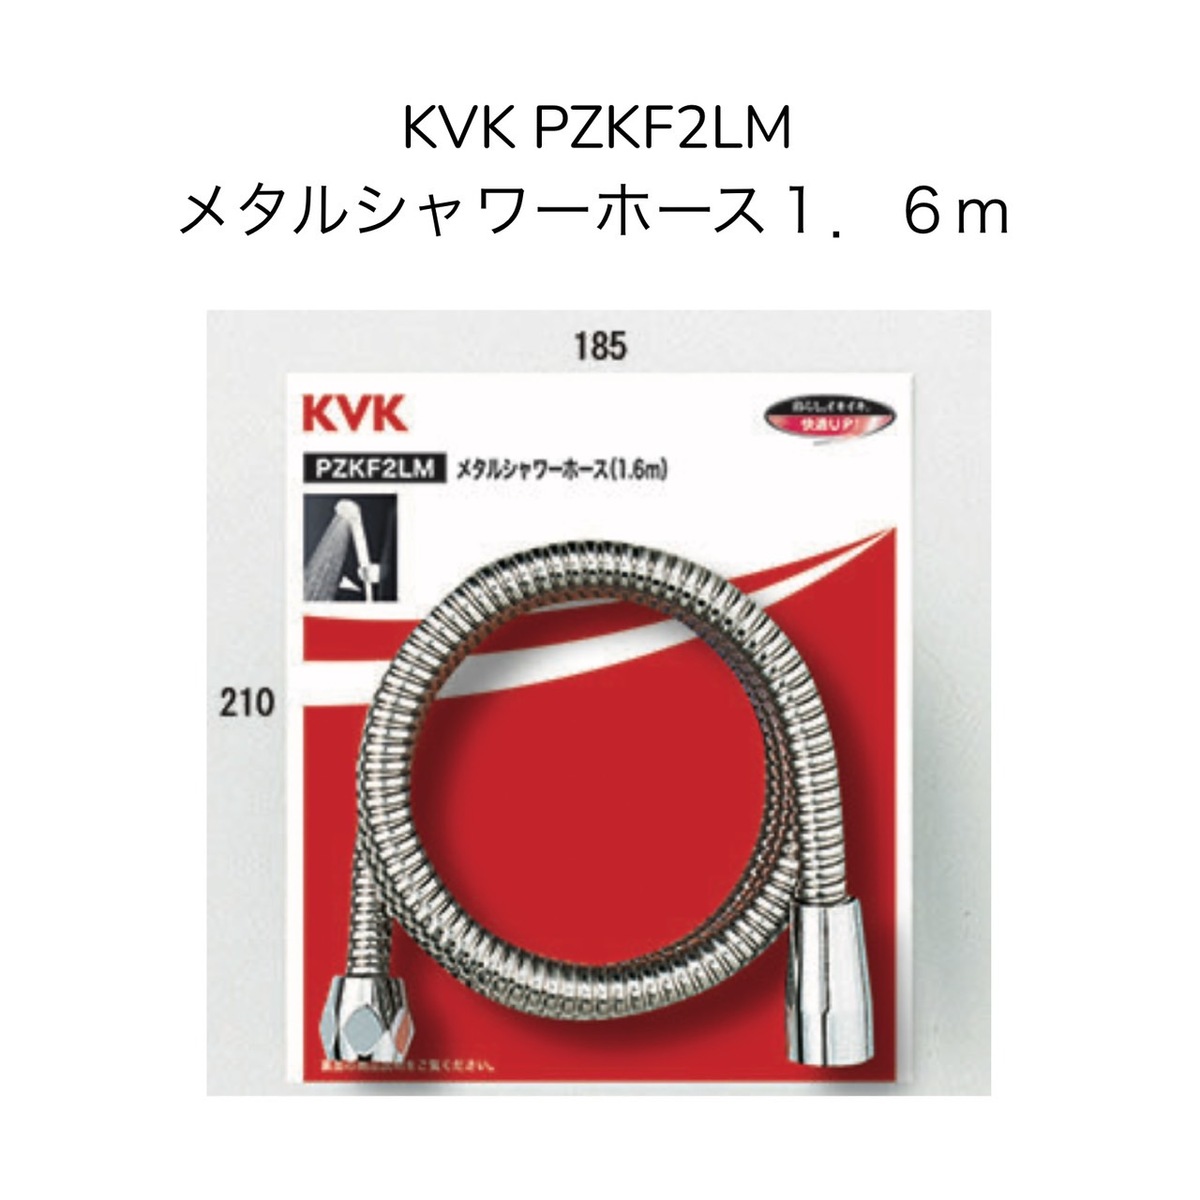 KVK☆FTB100KT サーモスタット式シャワー水栓 未開封 abitur.gnesin